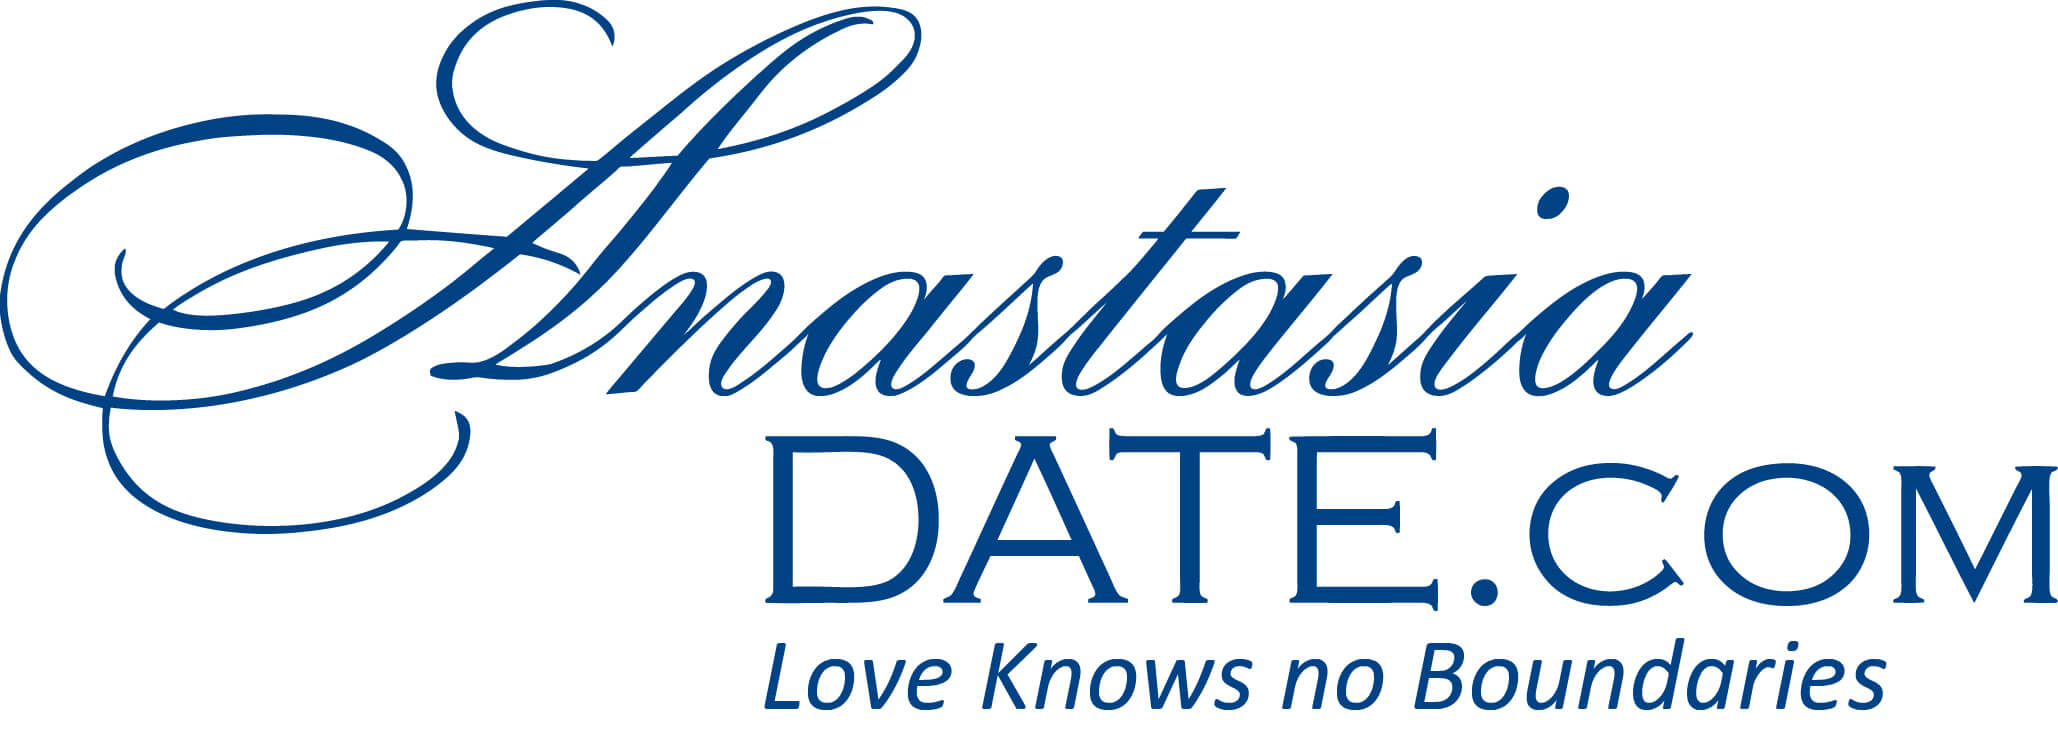 Business Development Companion - Anastasia Date